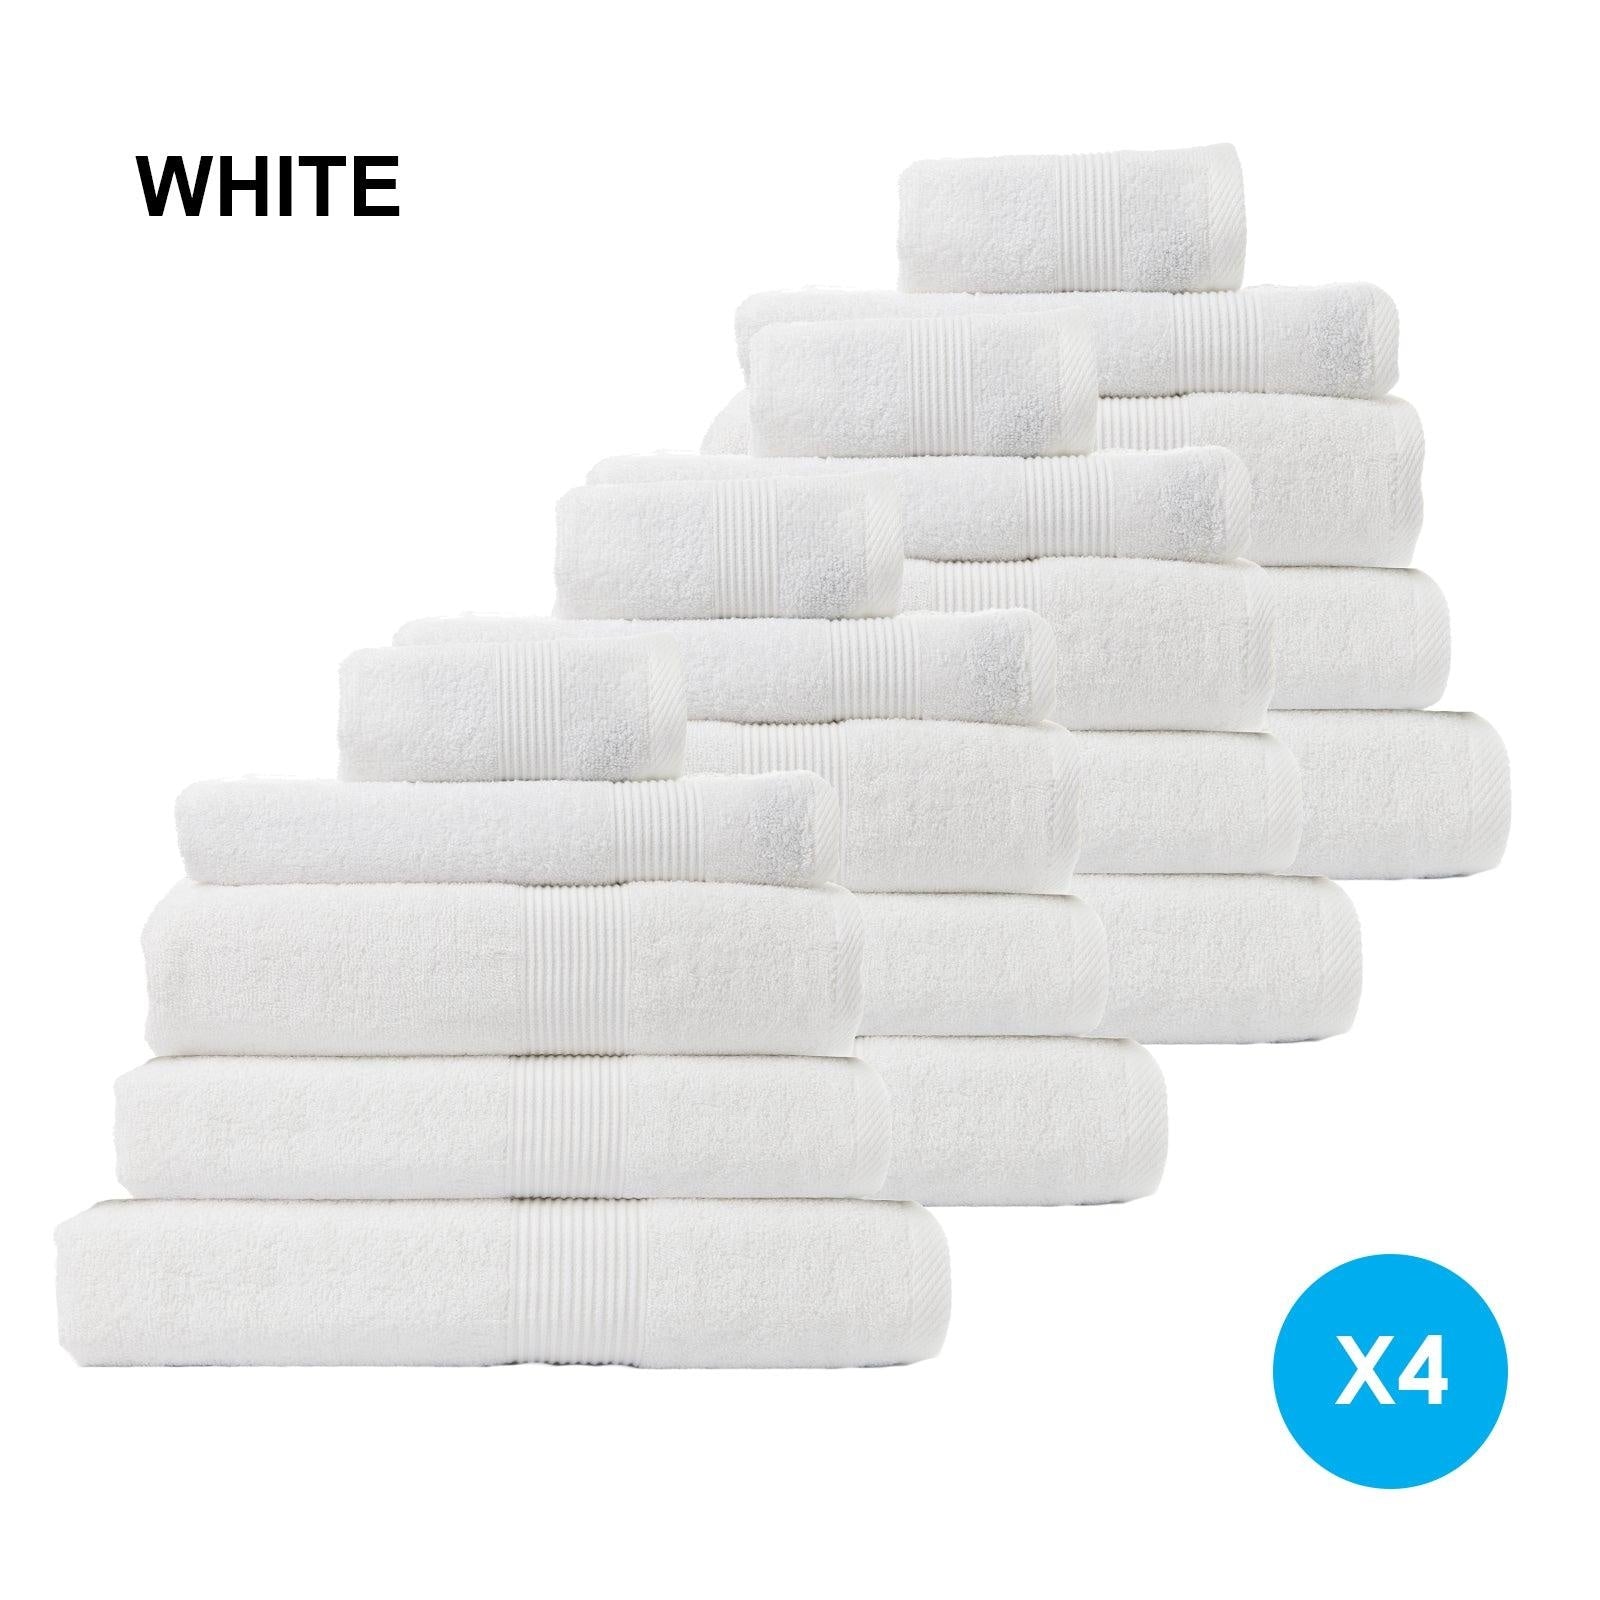 Royal Comfort 20 Piece Cotton Bamboo Towel Bundle Set 450GSM Luxurious Absorbent White Deals499